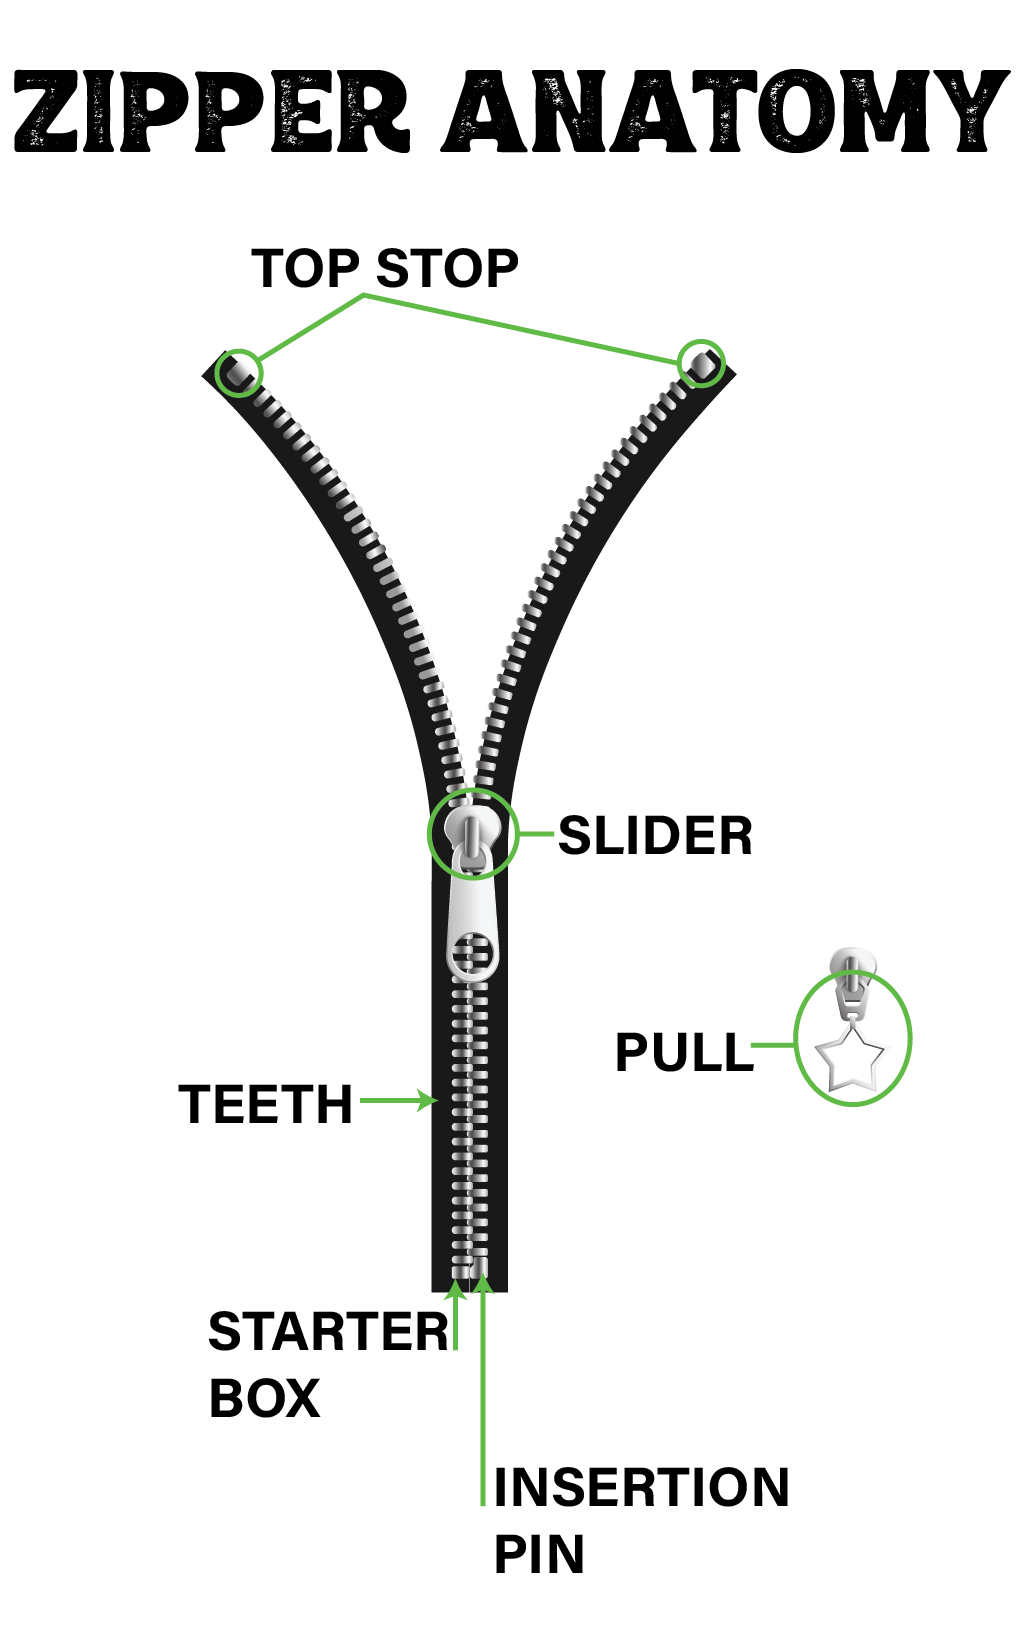 Anatomy of a Zipper